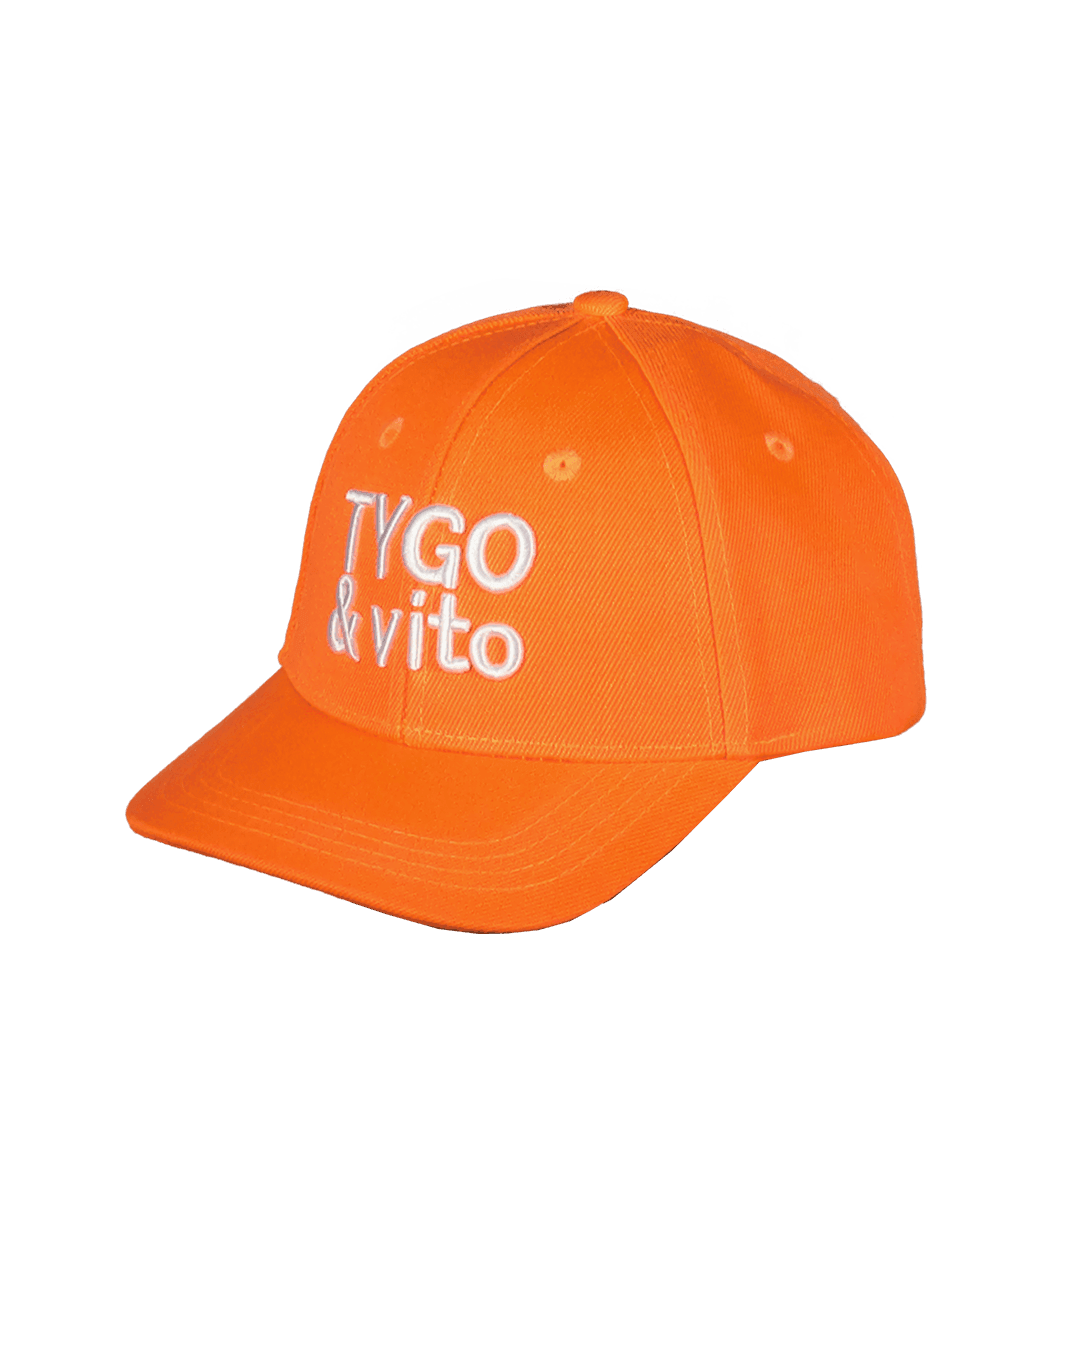 Cap Orange - TYGO&vito